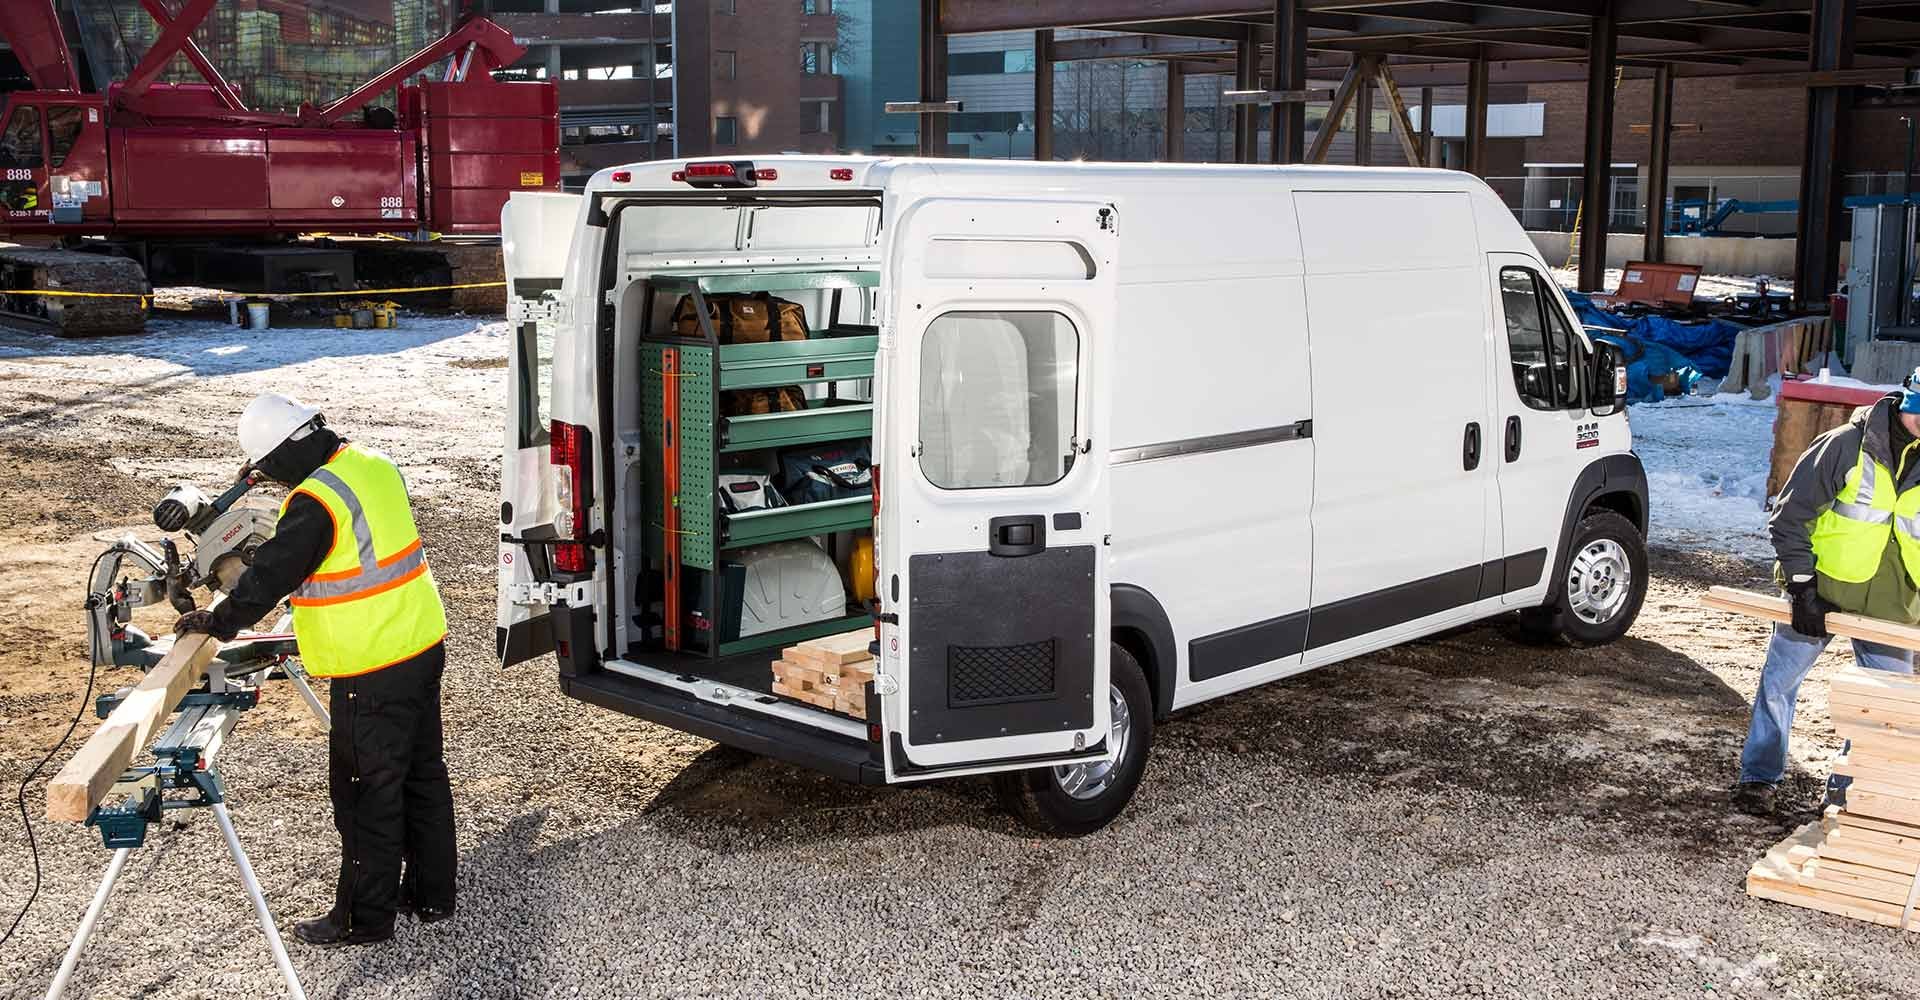 2021 Ram ProMaster® | Cargo Van | Interior, Towing Capacity & More